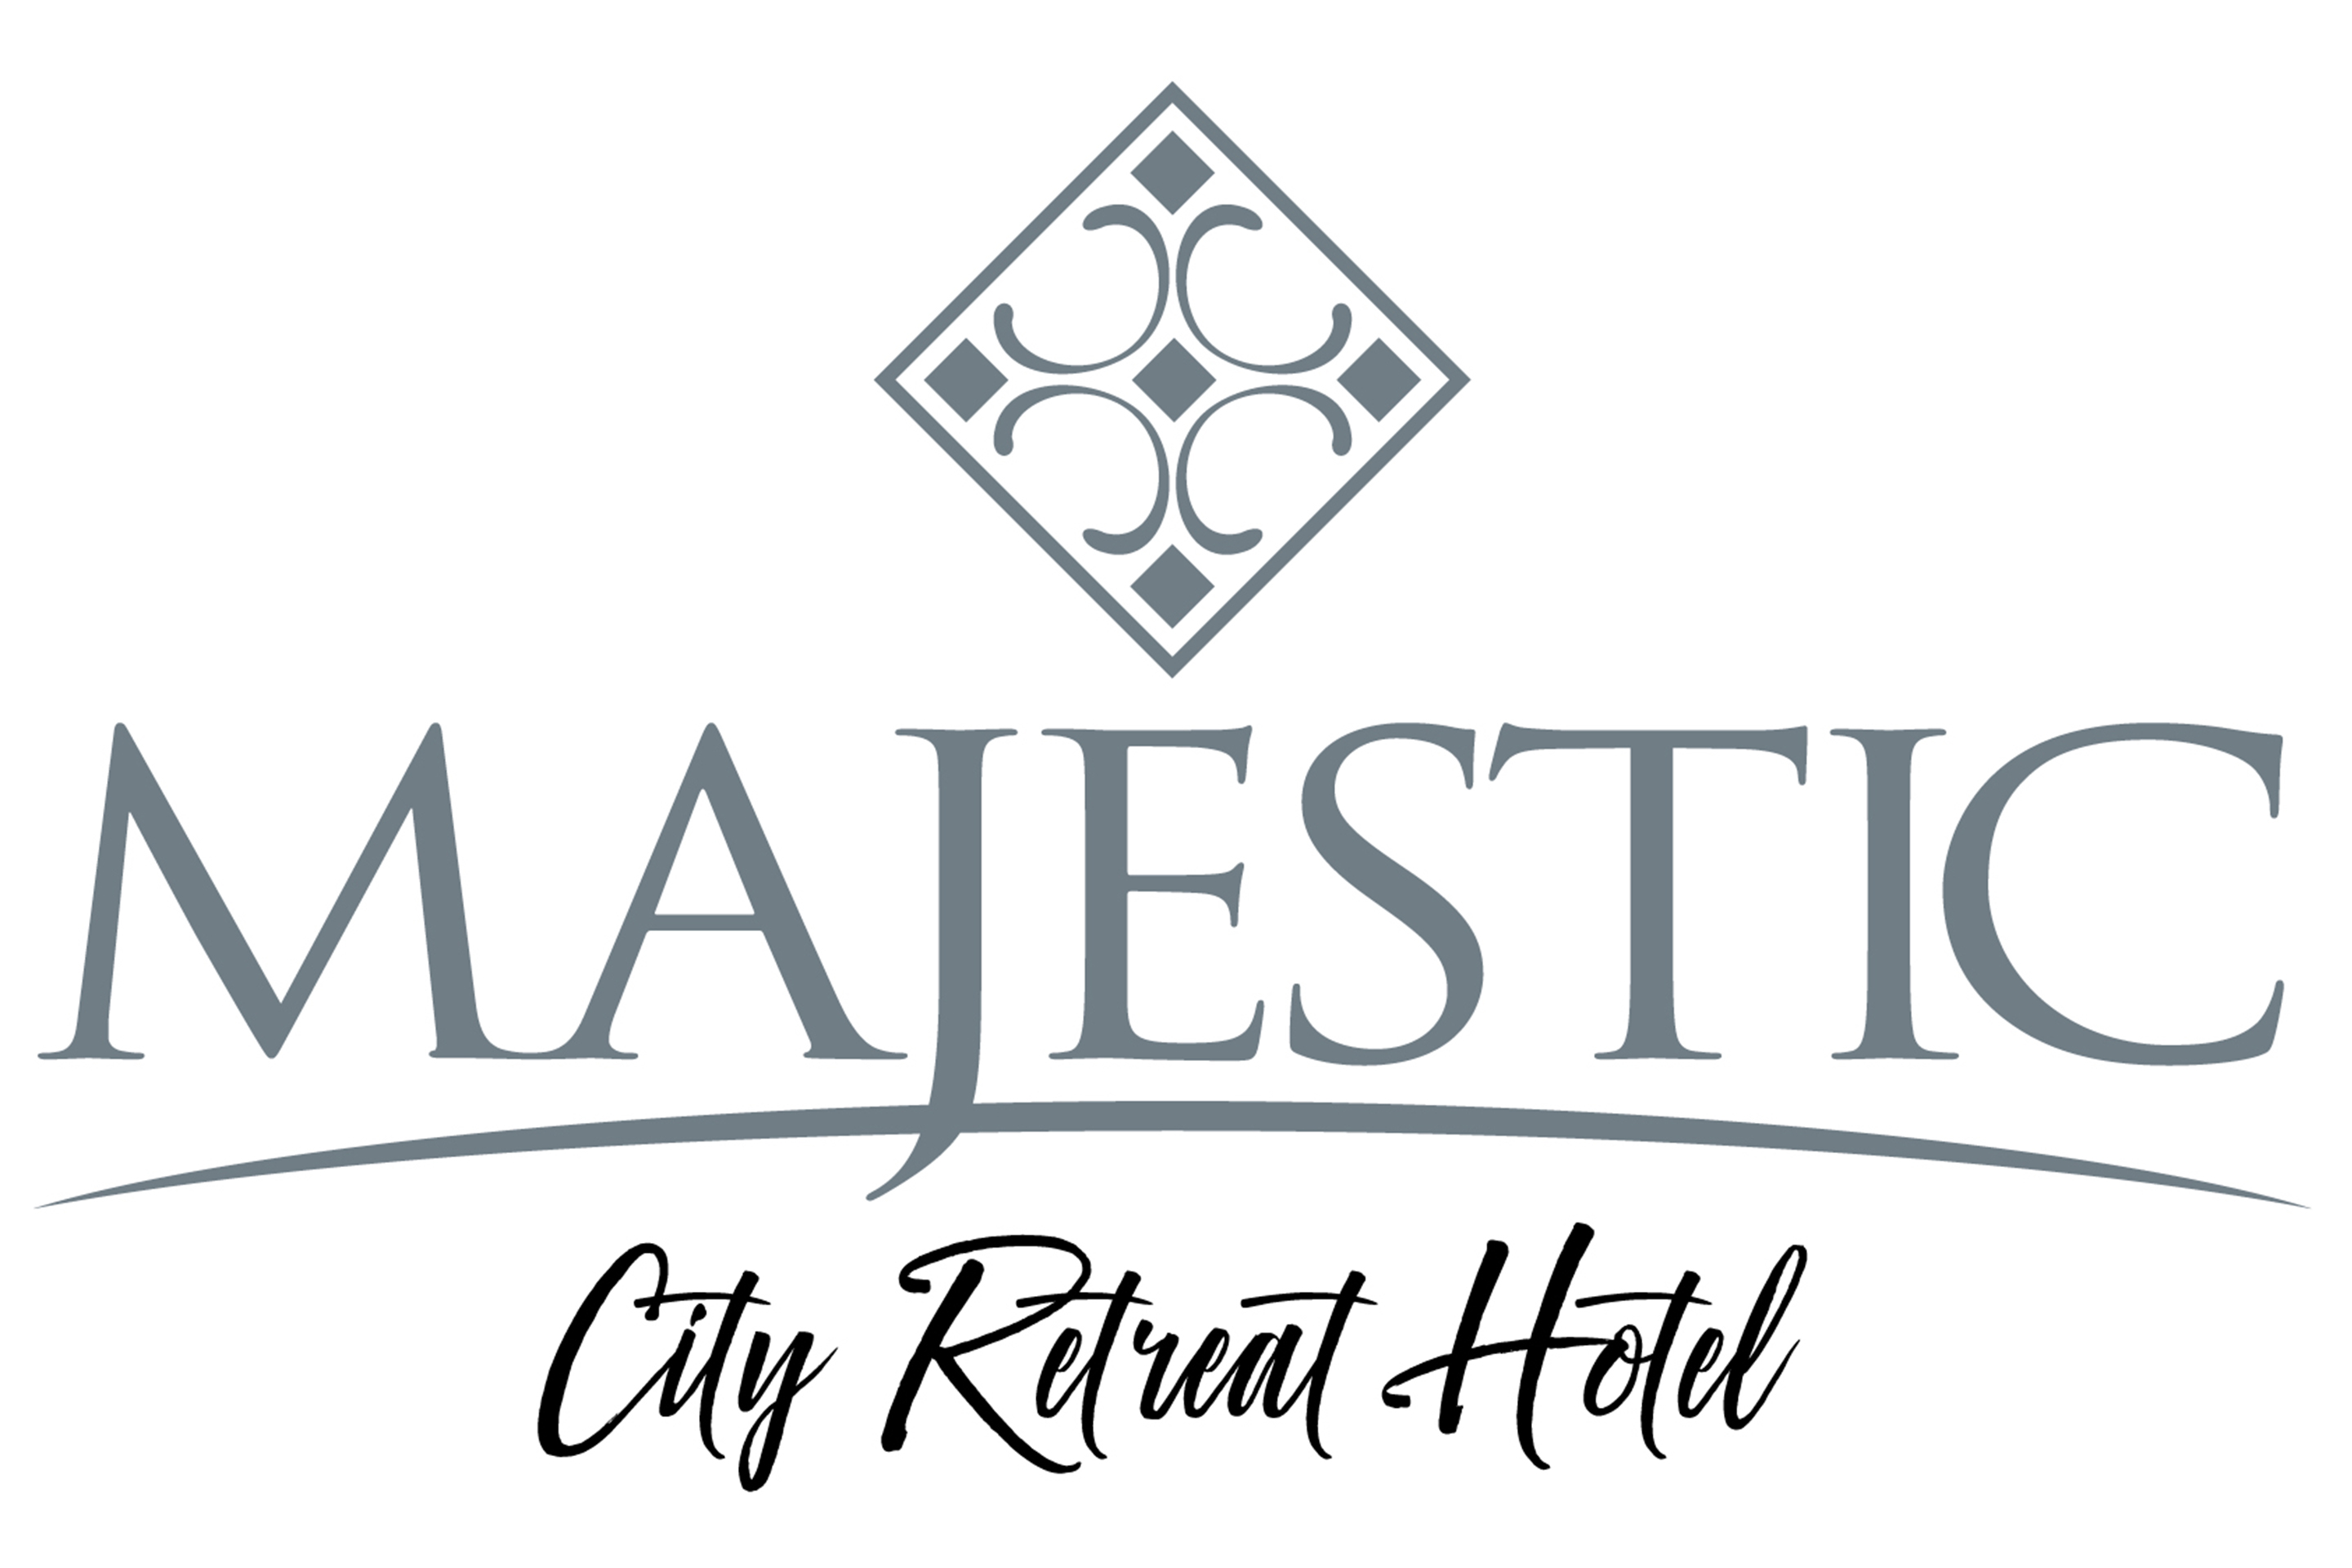 Hotel Majestic City Retreat Hotel